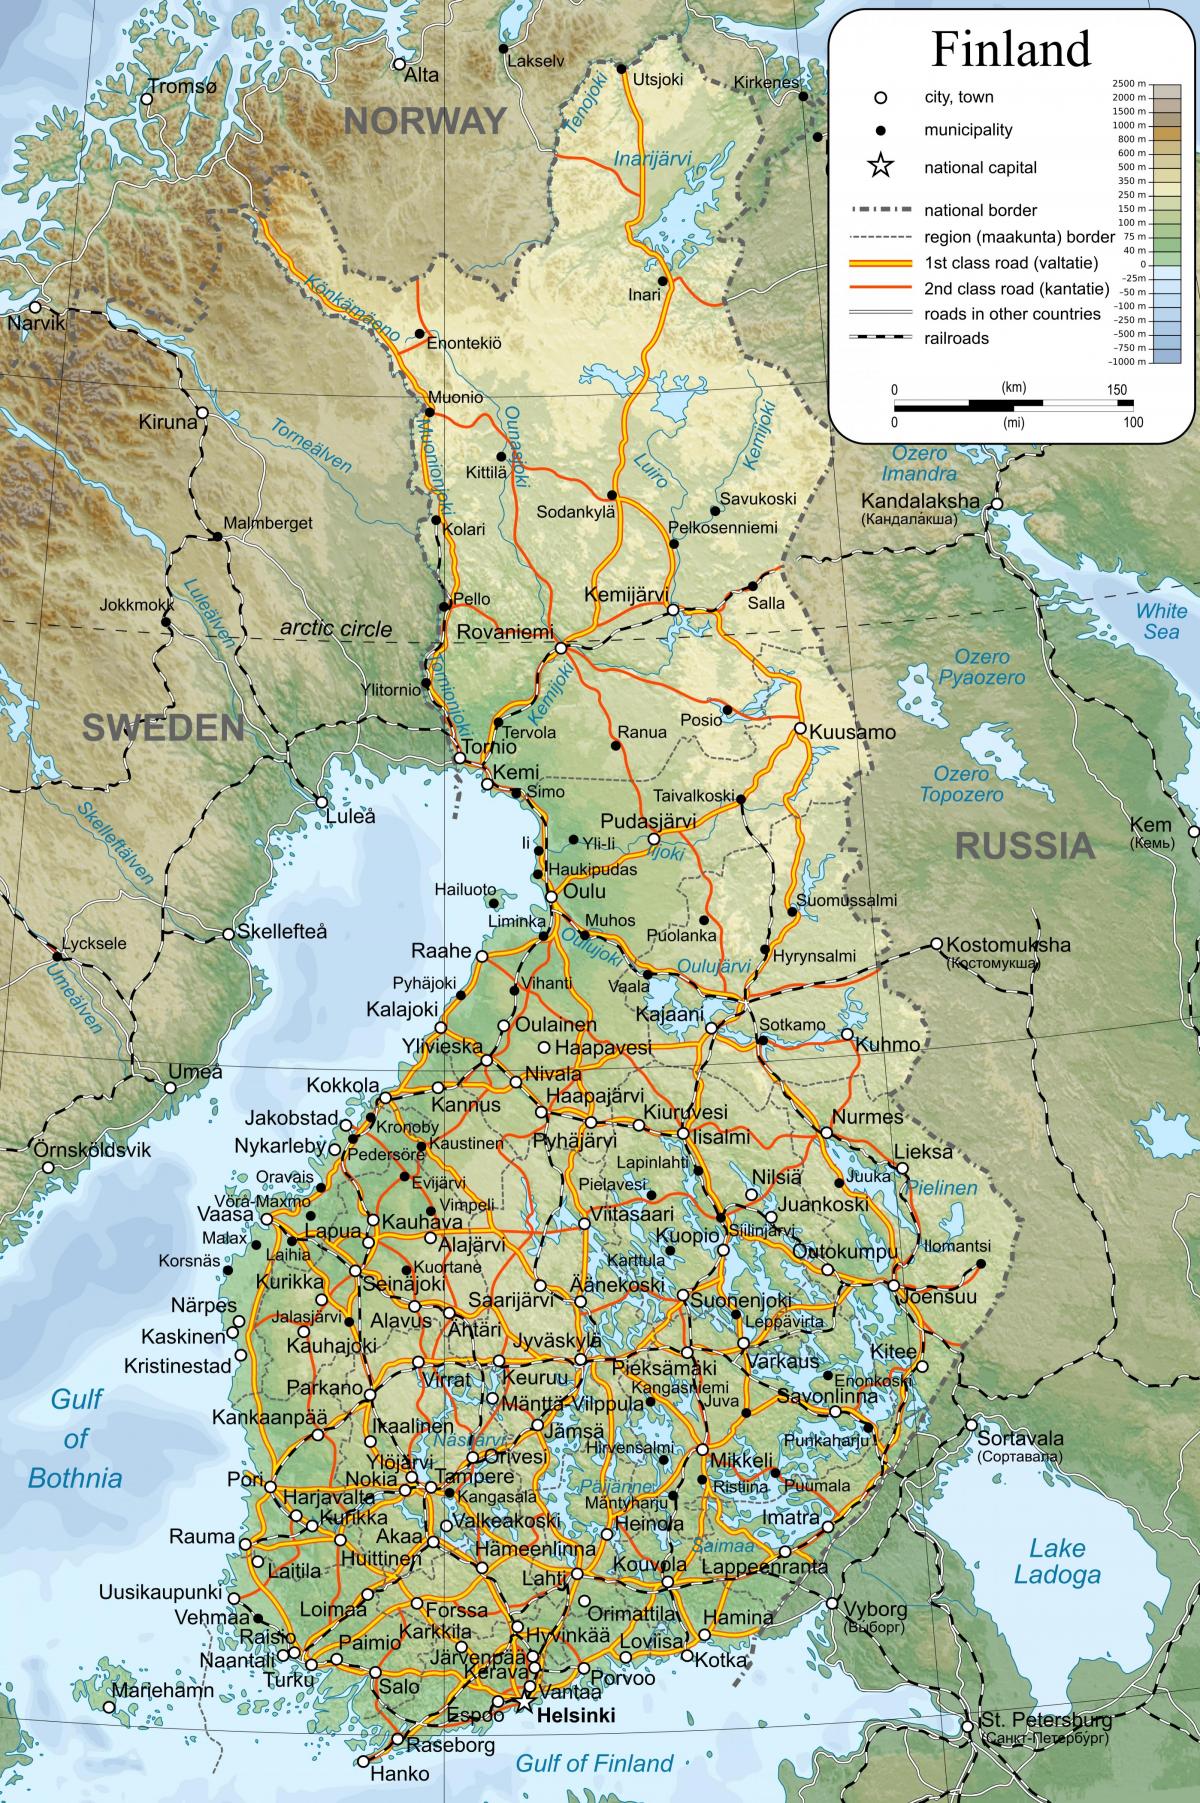 Peta - peta terperinci Finland